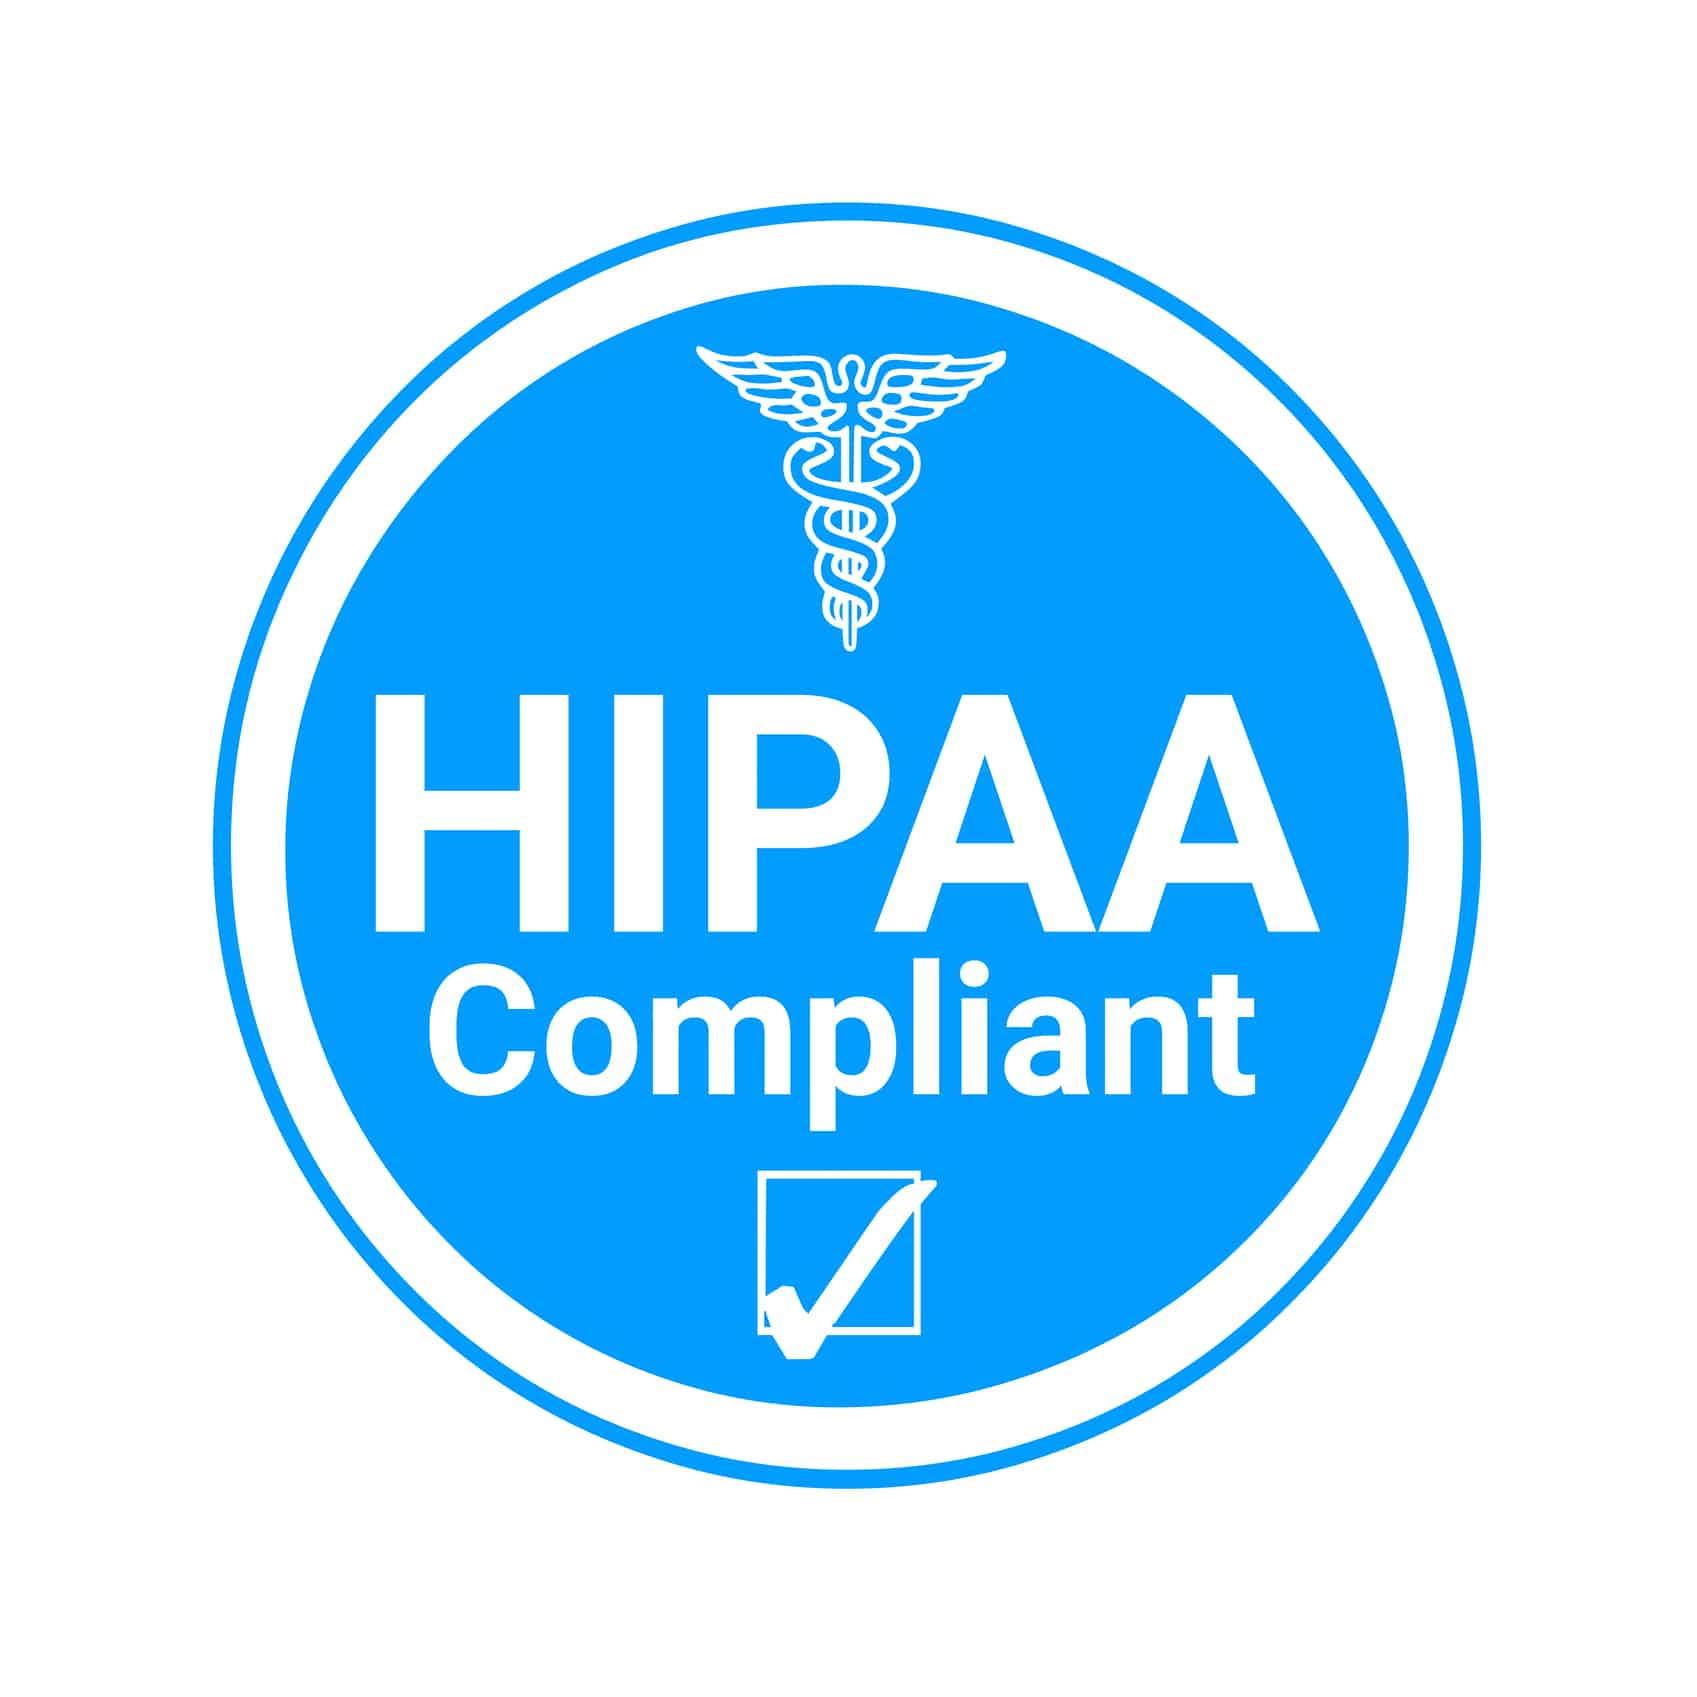 HIPAA compliant logo with check mark